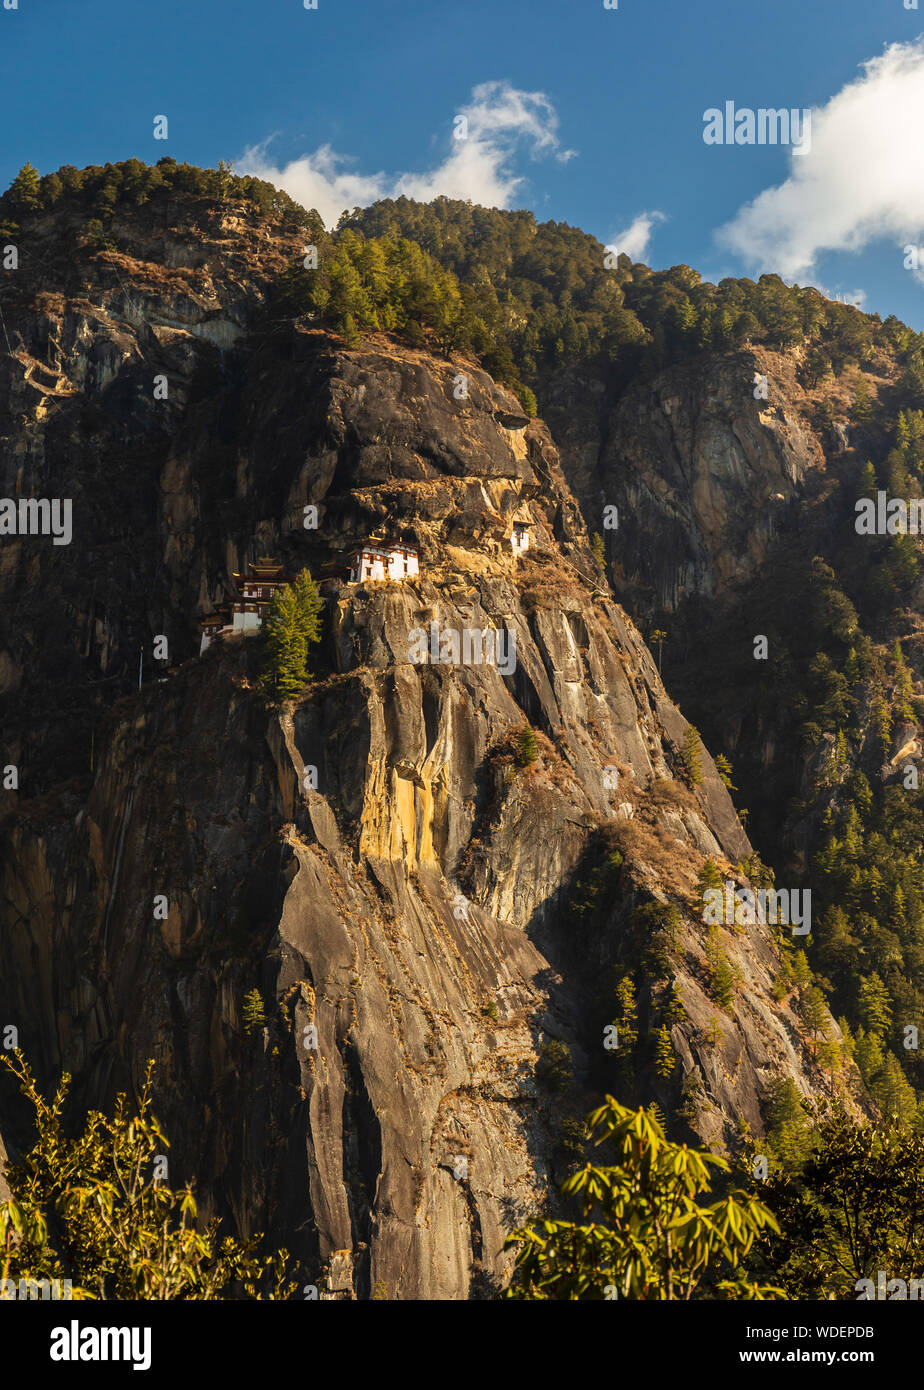 View of Tiger's Nest Monastery on the mountain, Bhutan Stock Photo